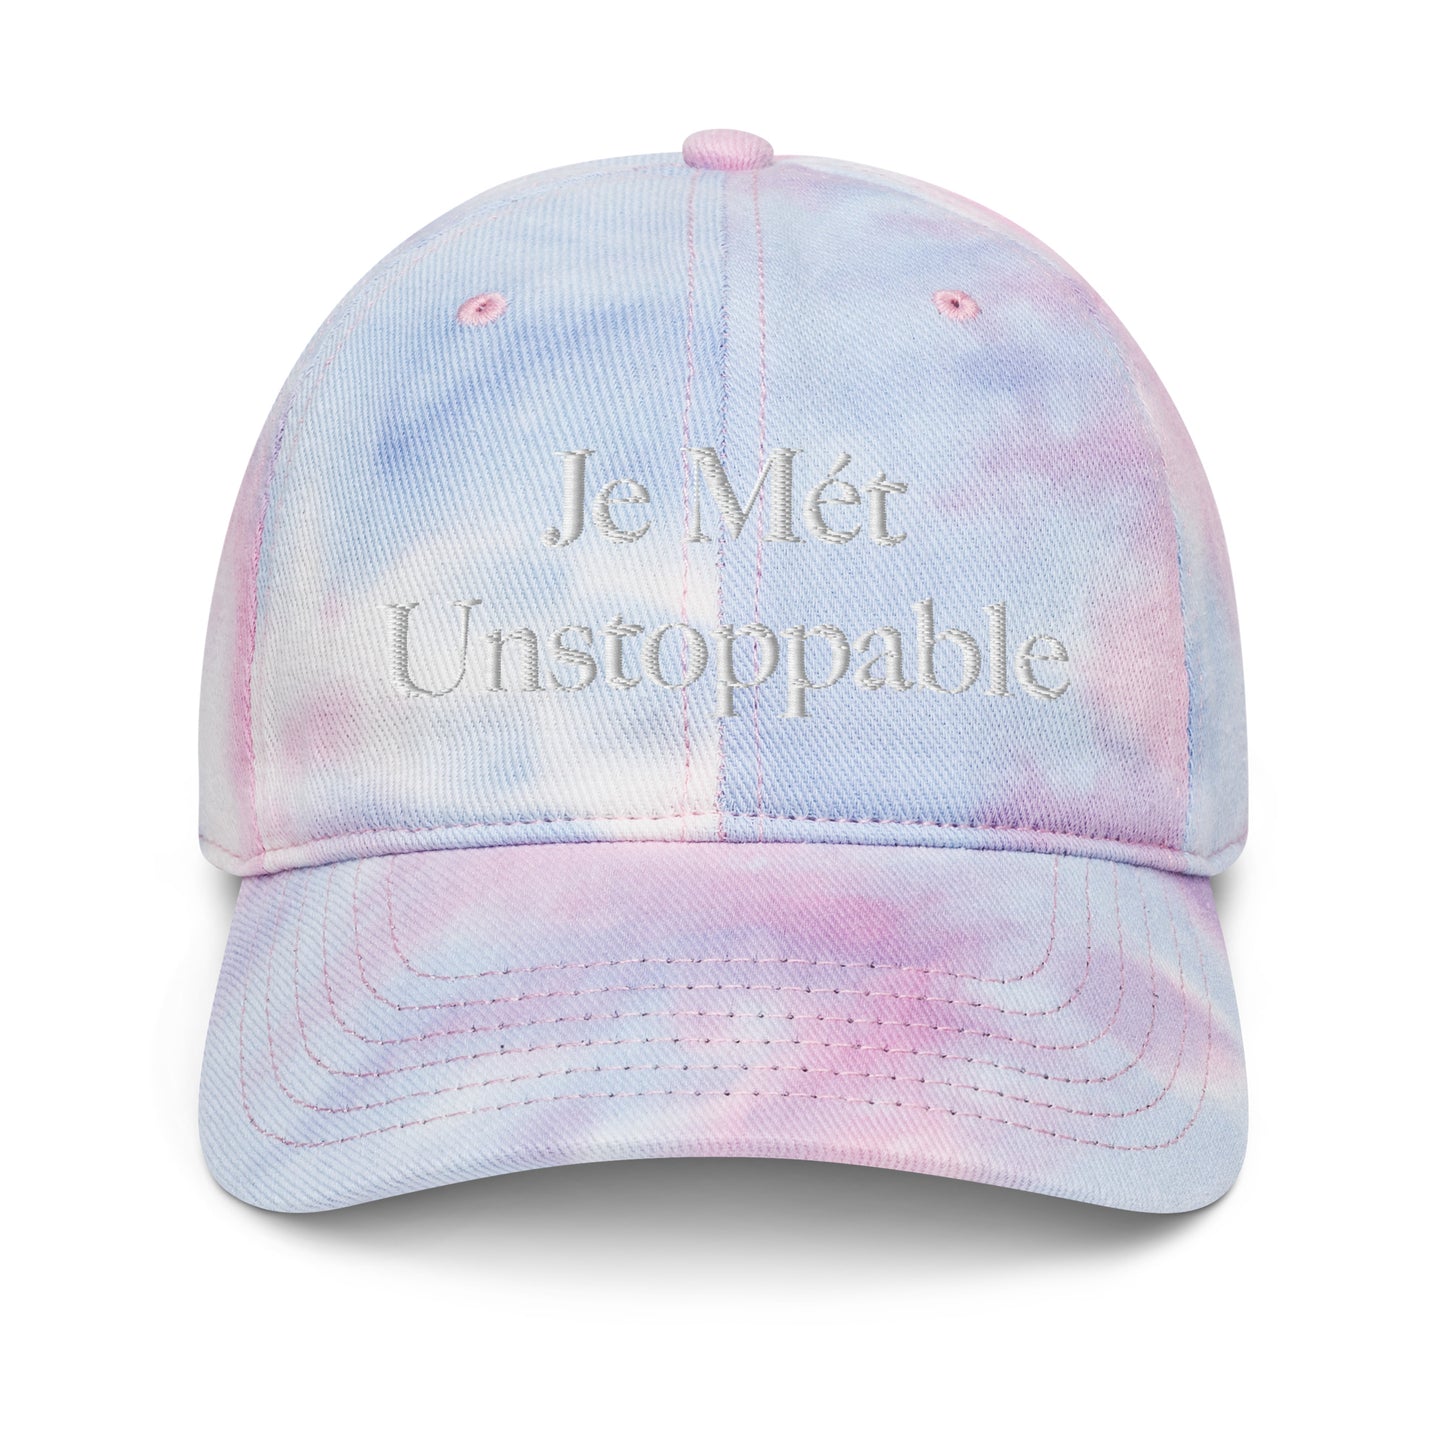 Unstoppable Tie dye hat